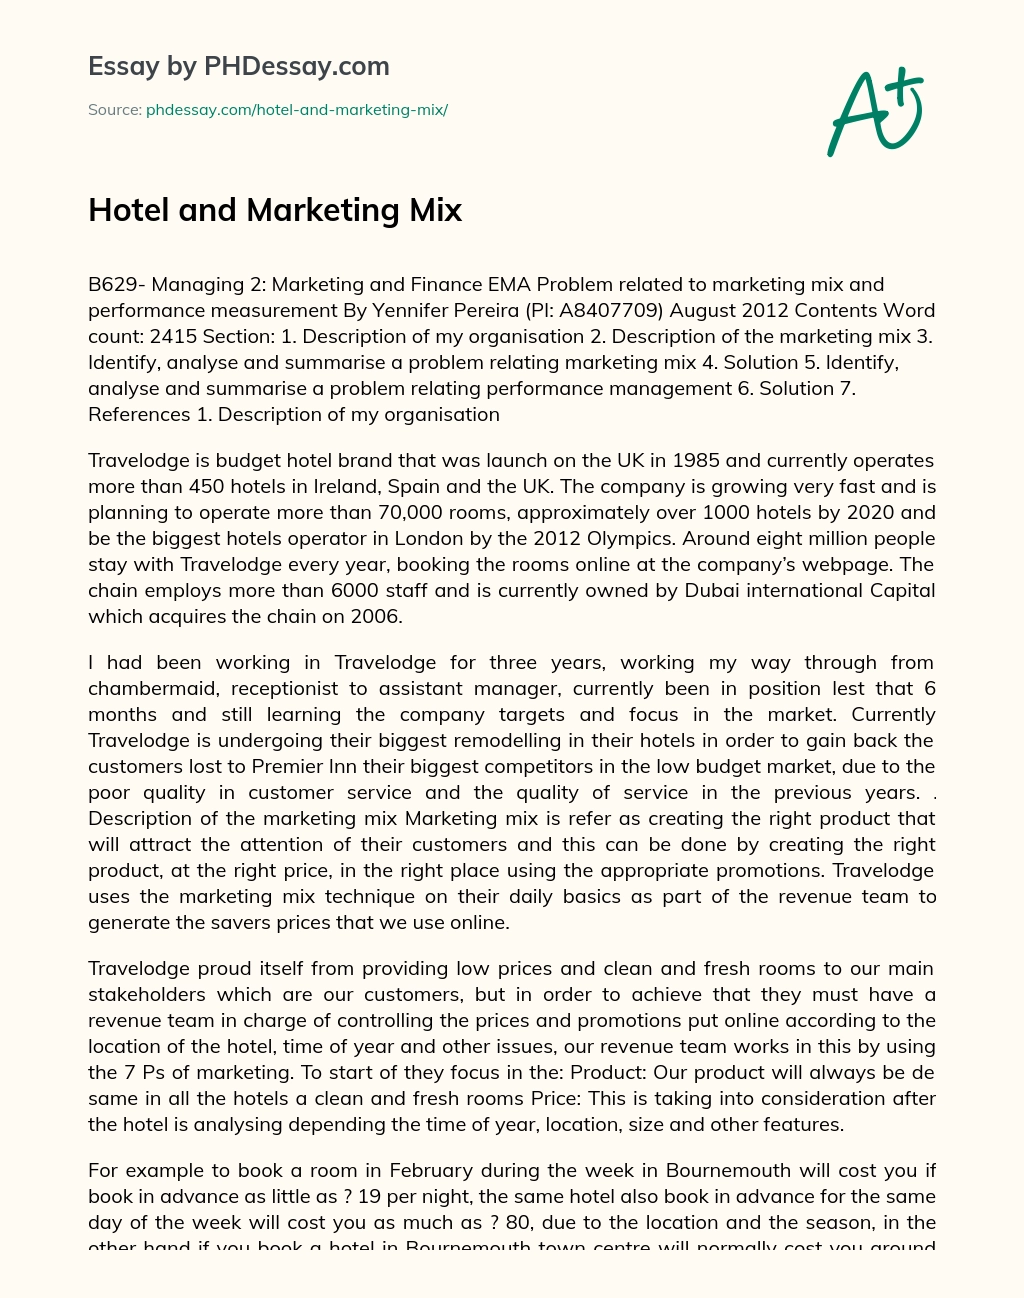 Hotel and Marketing Mix essay